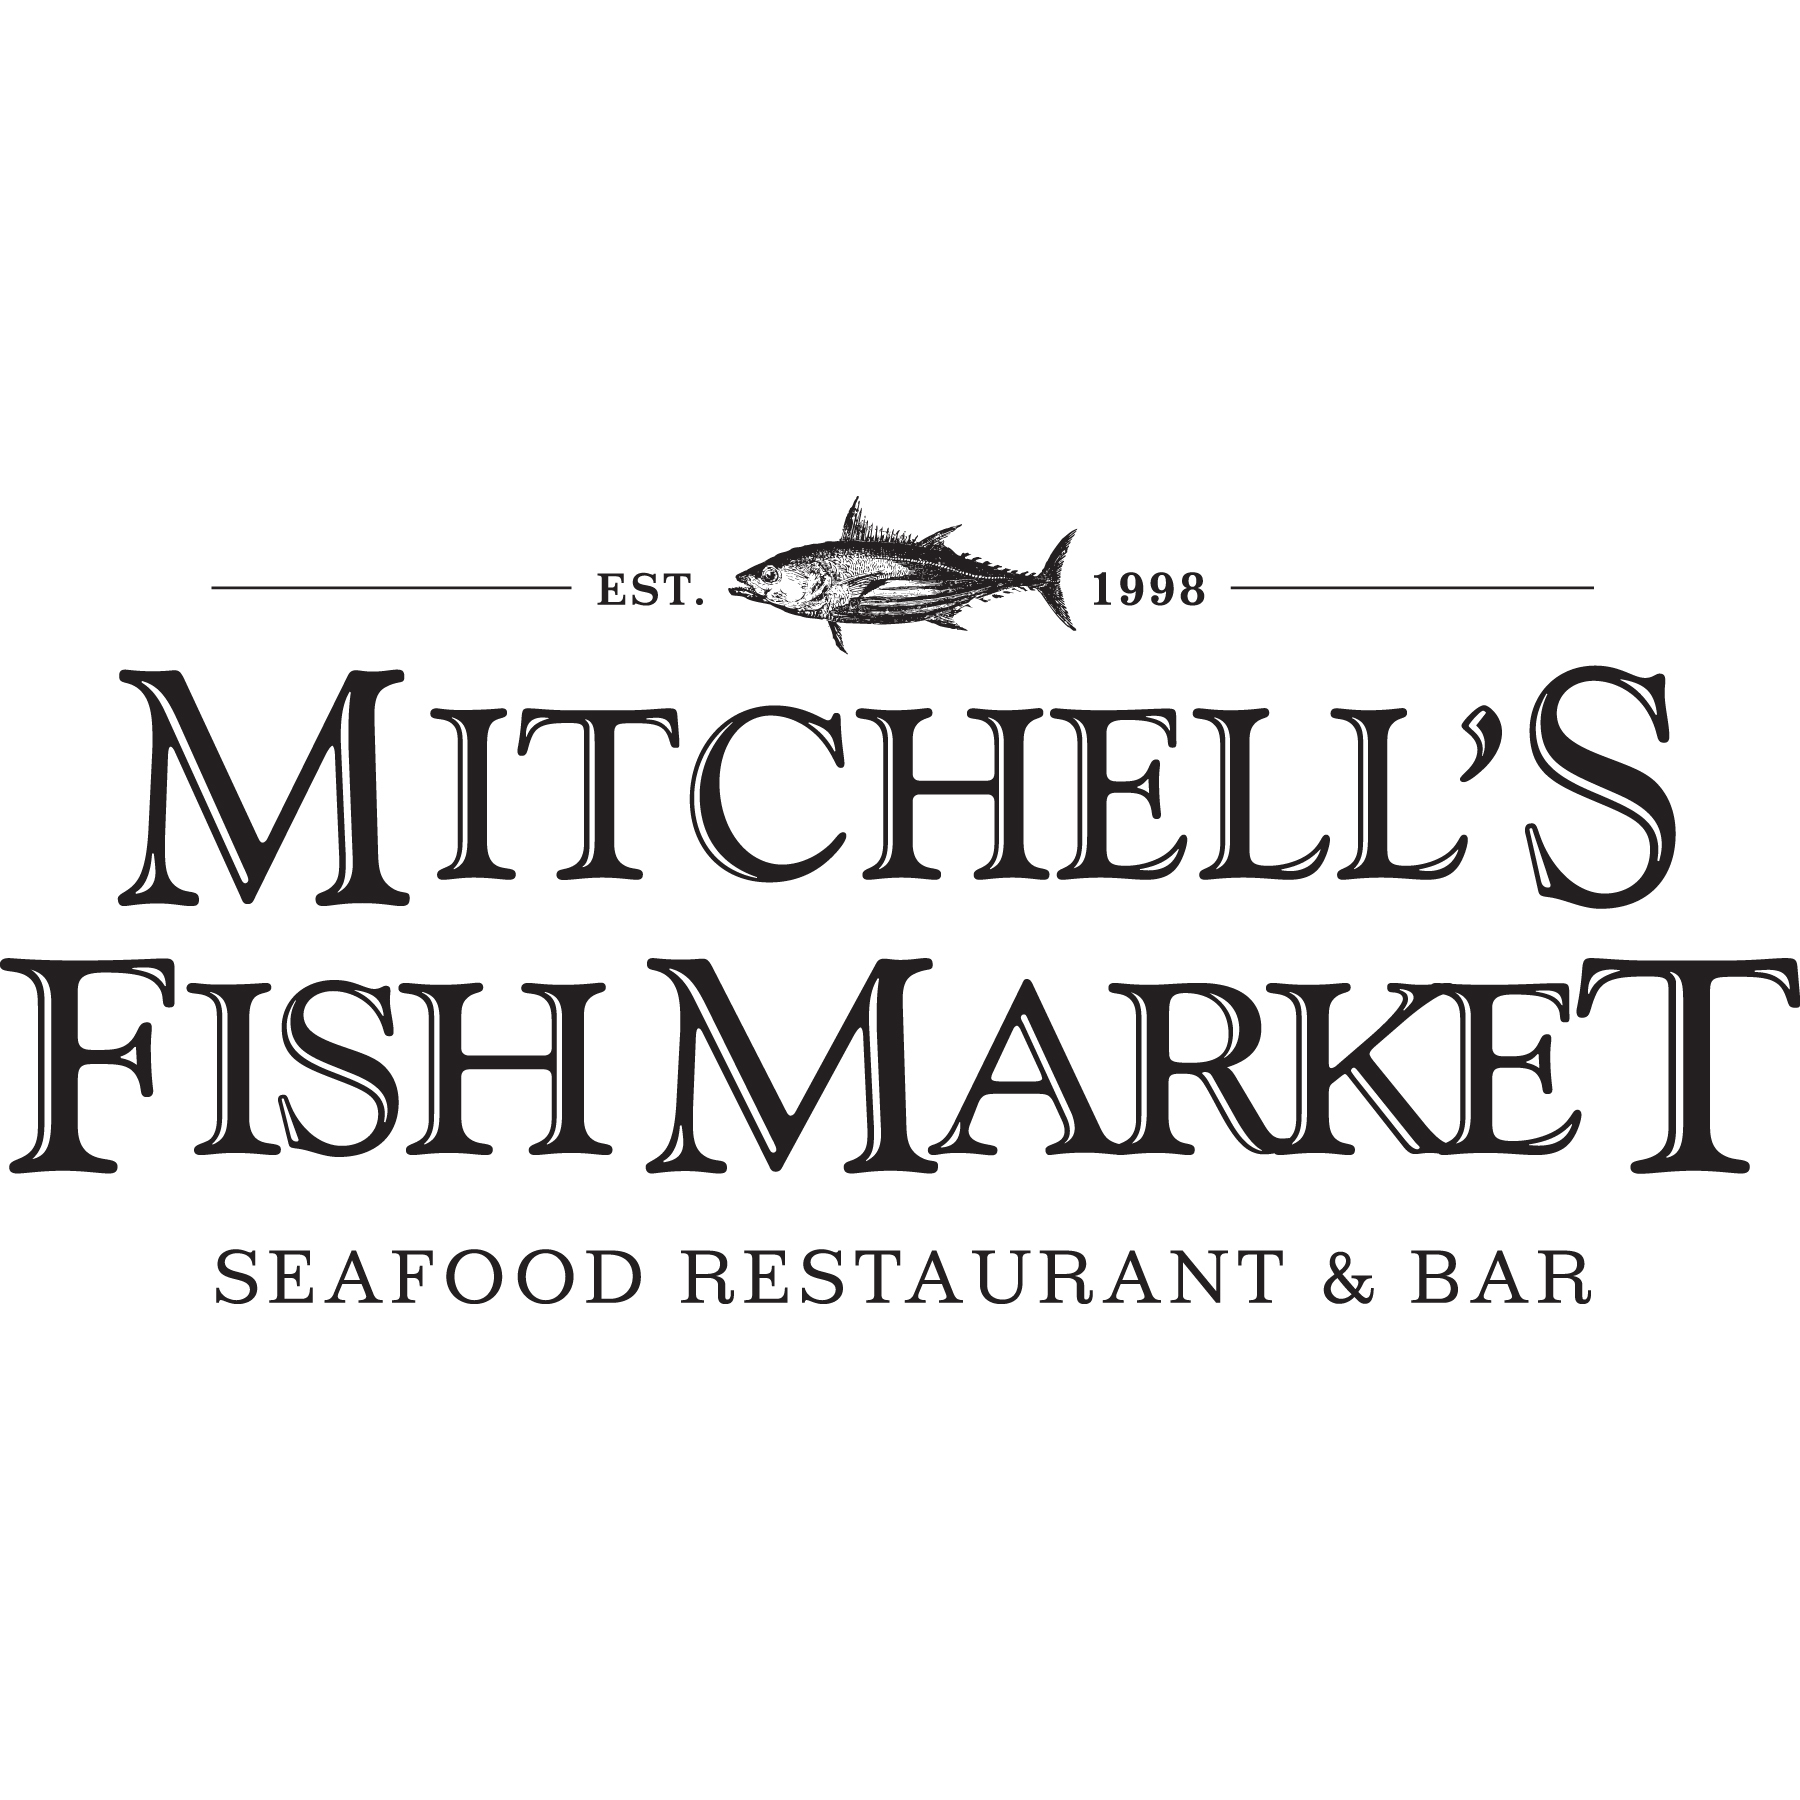 Mitchell's Fish Market